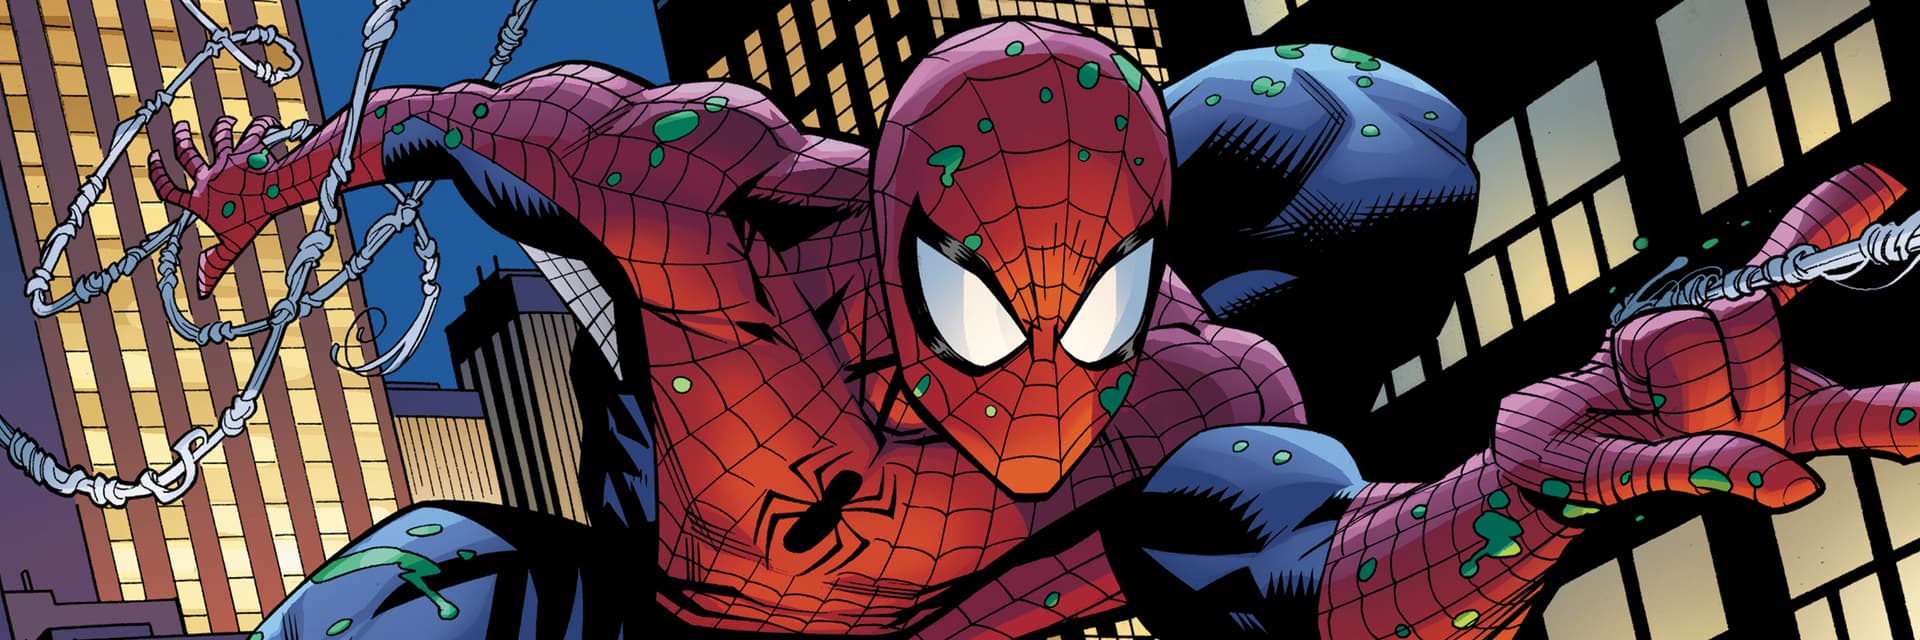 Nature Star Spiderman Costume Pour Adulte, Super-héros Spider Costu